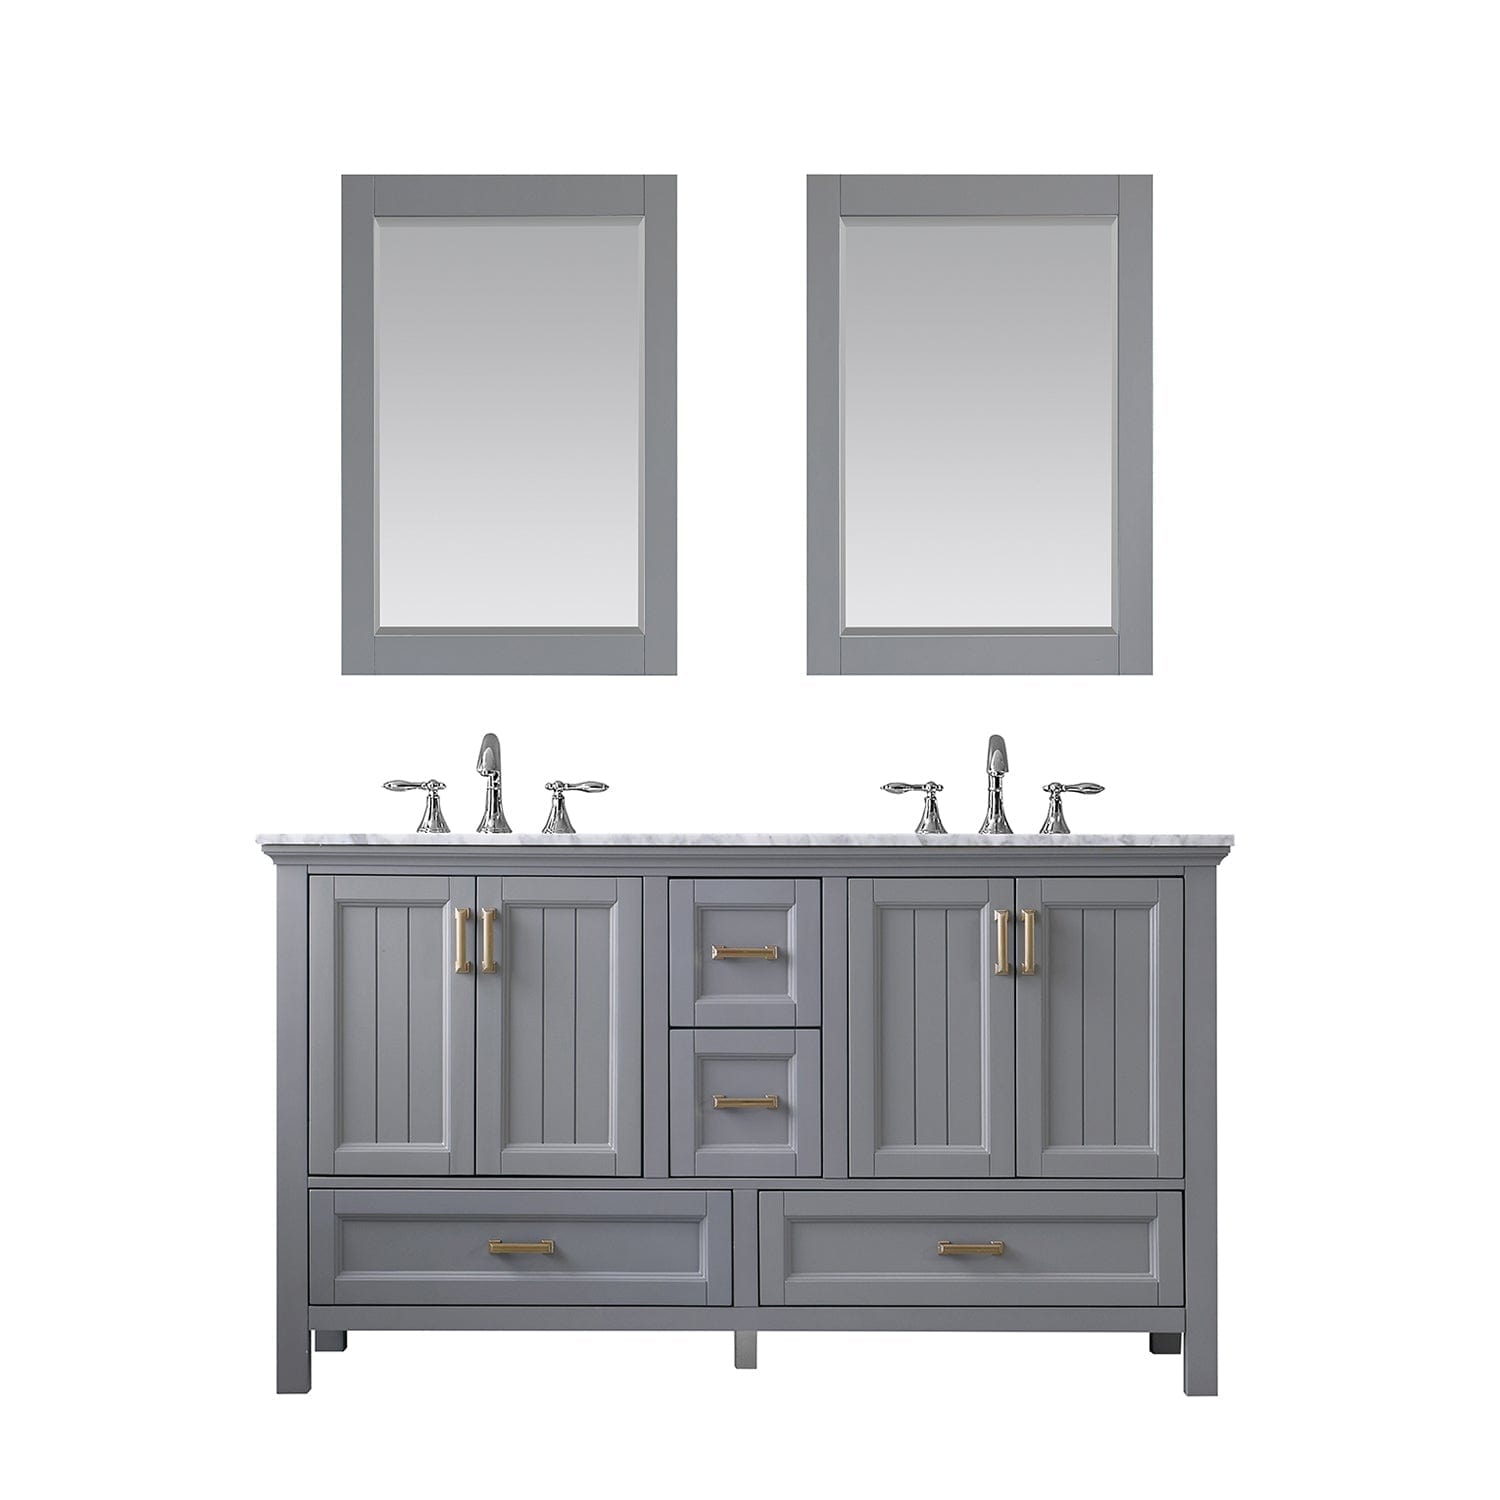 Altair Isla 60" Double Bathroom Vanity Set in Gray and Carrara White Marble Countertop with Mirror 538060-GR-CA - Molaix631112970891Vanity538060-GR-CA